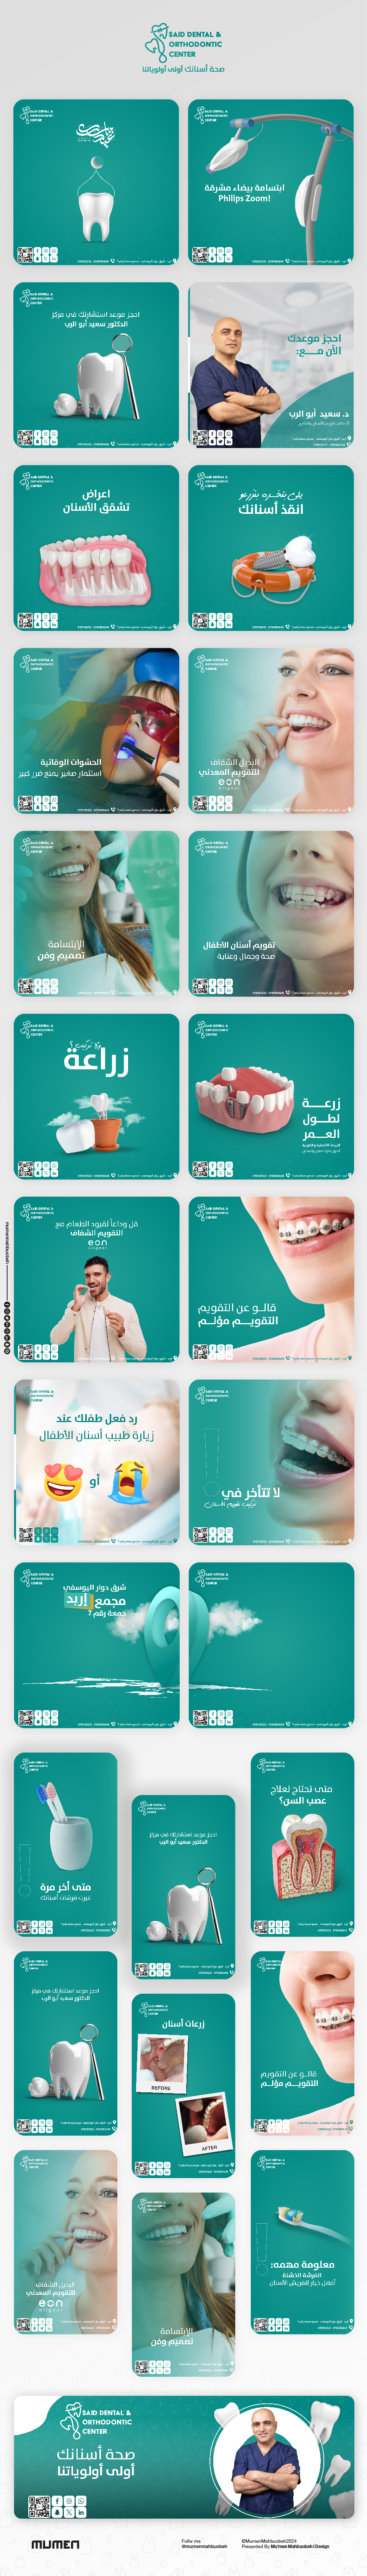 Said Dental Orthodontic Center rendition image